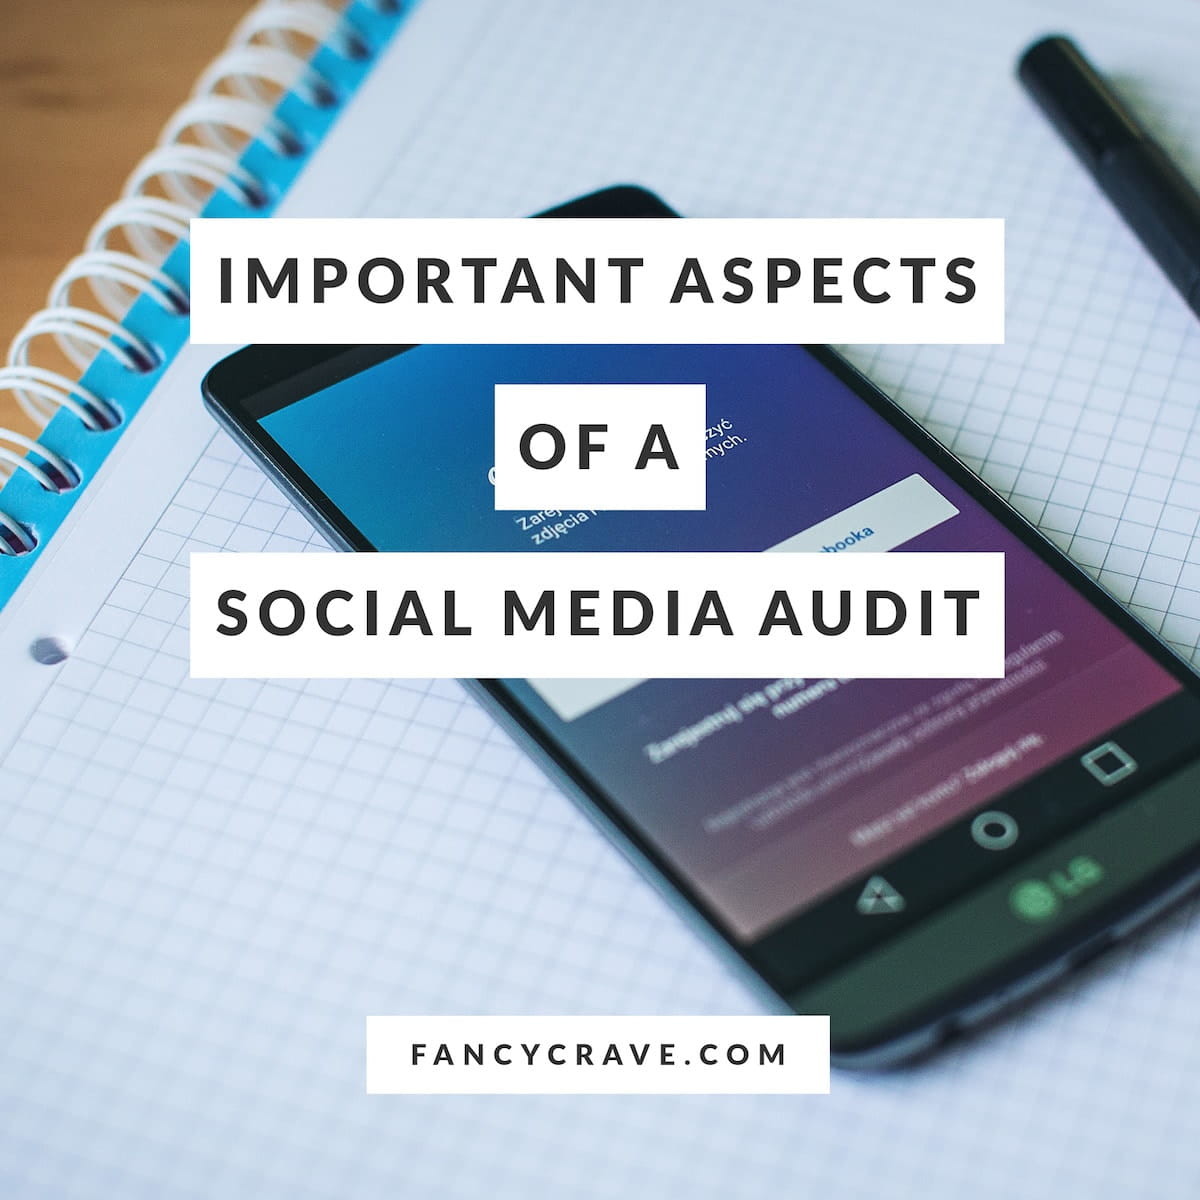 5 Important Aspects of a Social Media Audit